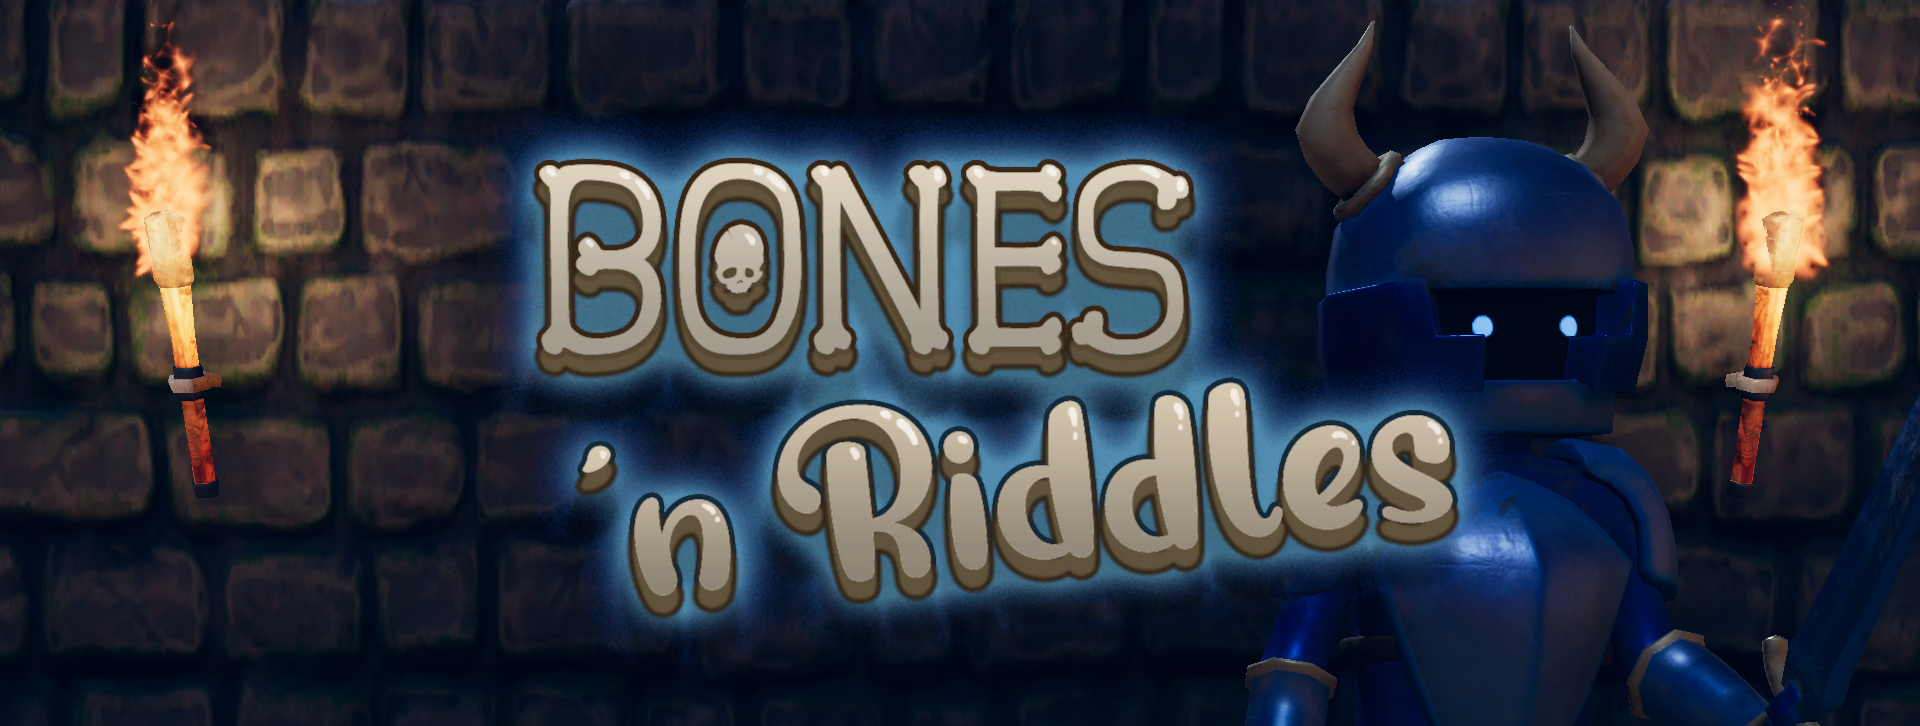 Bones 'n Riddles